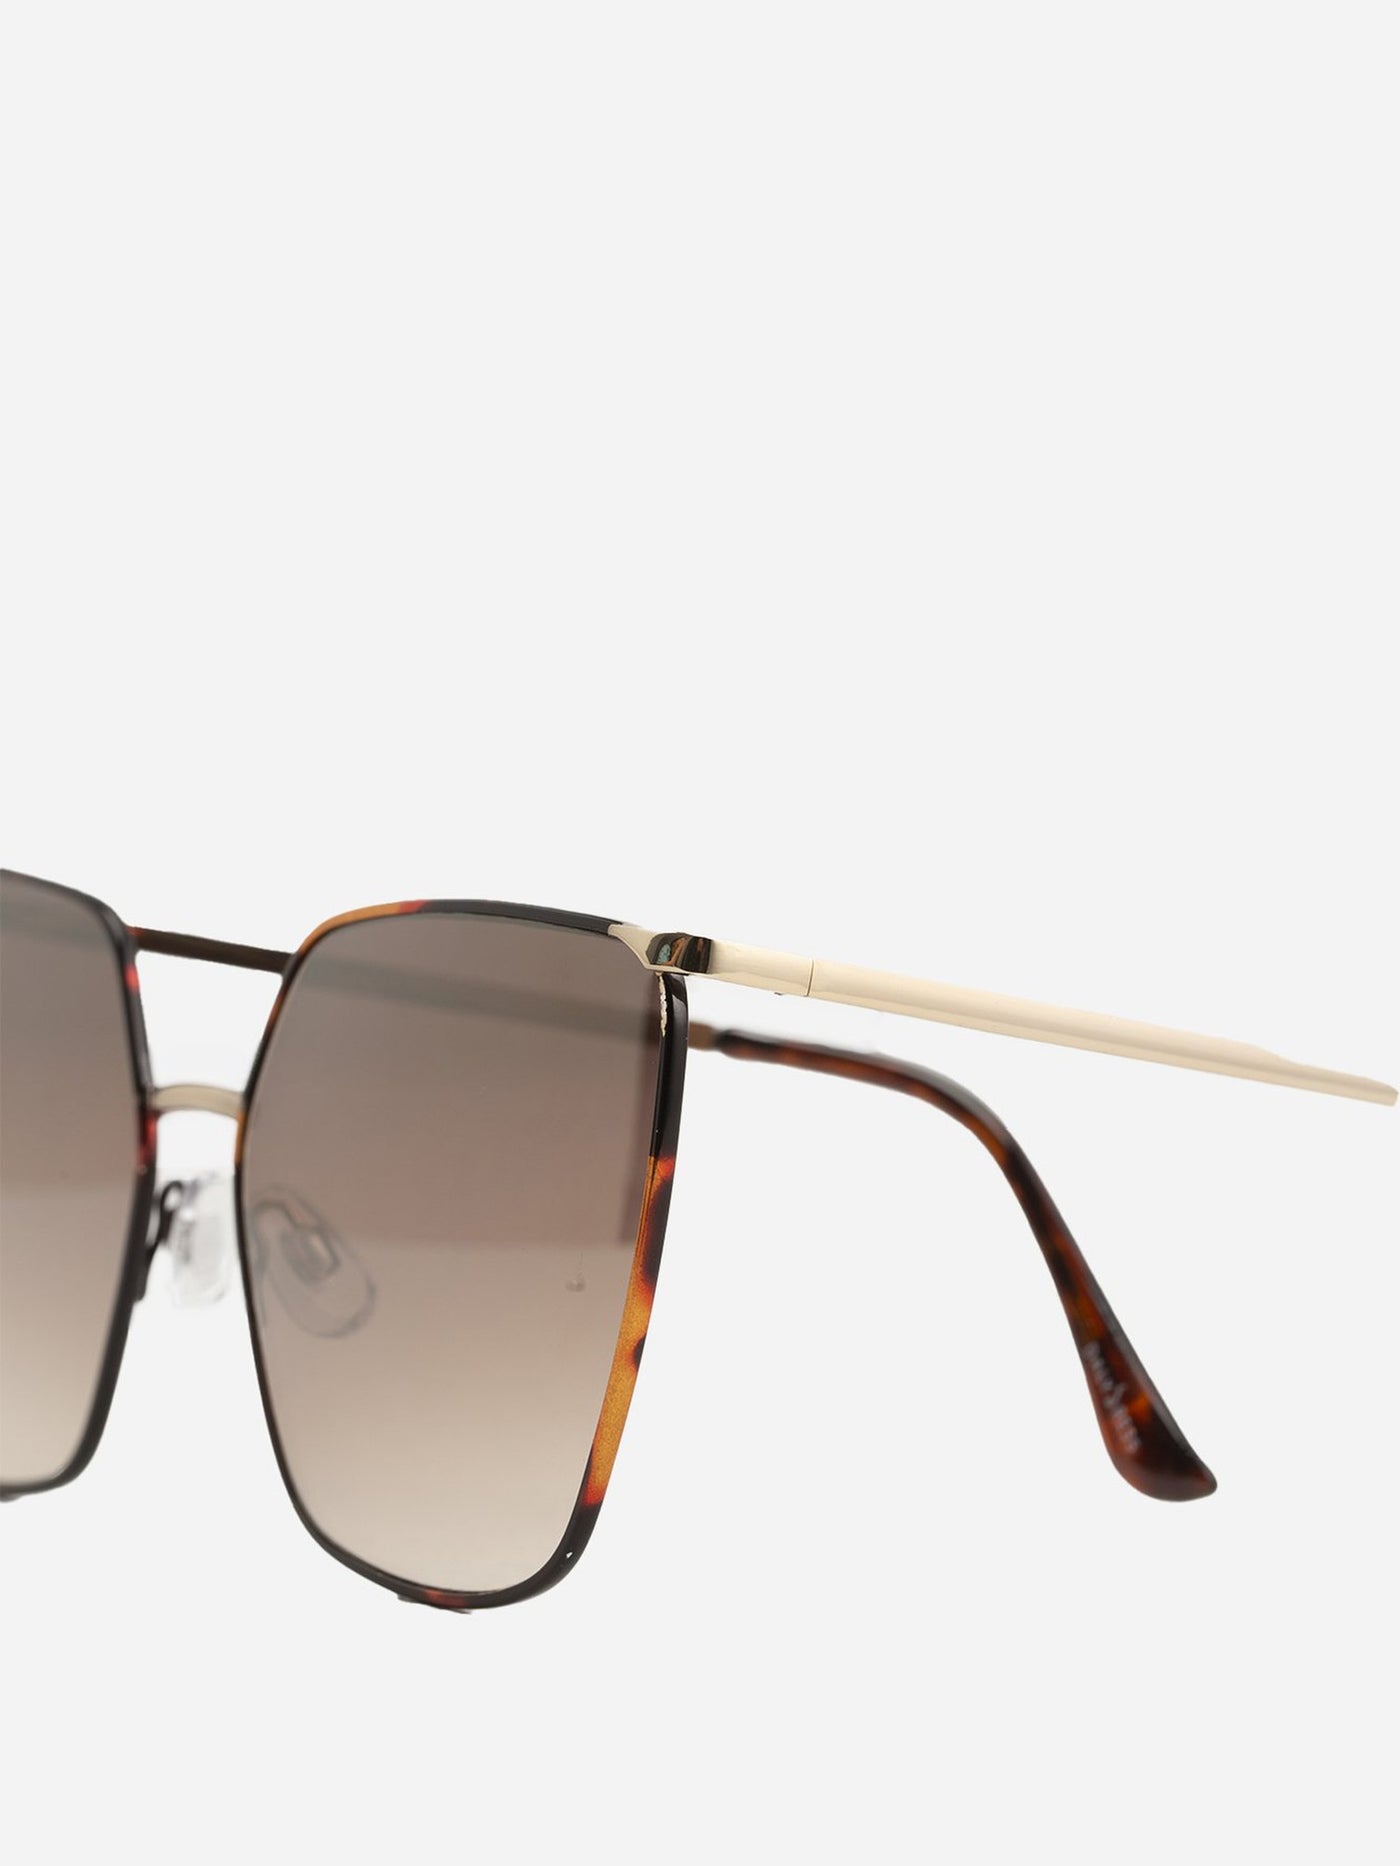 Sunglasses - Thin Tortoise Frame